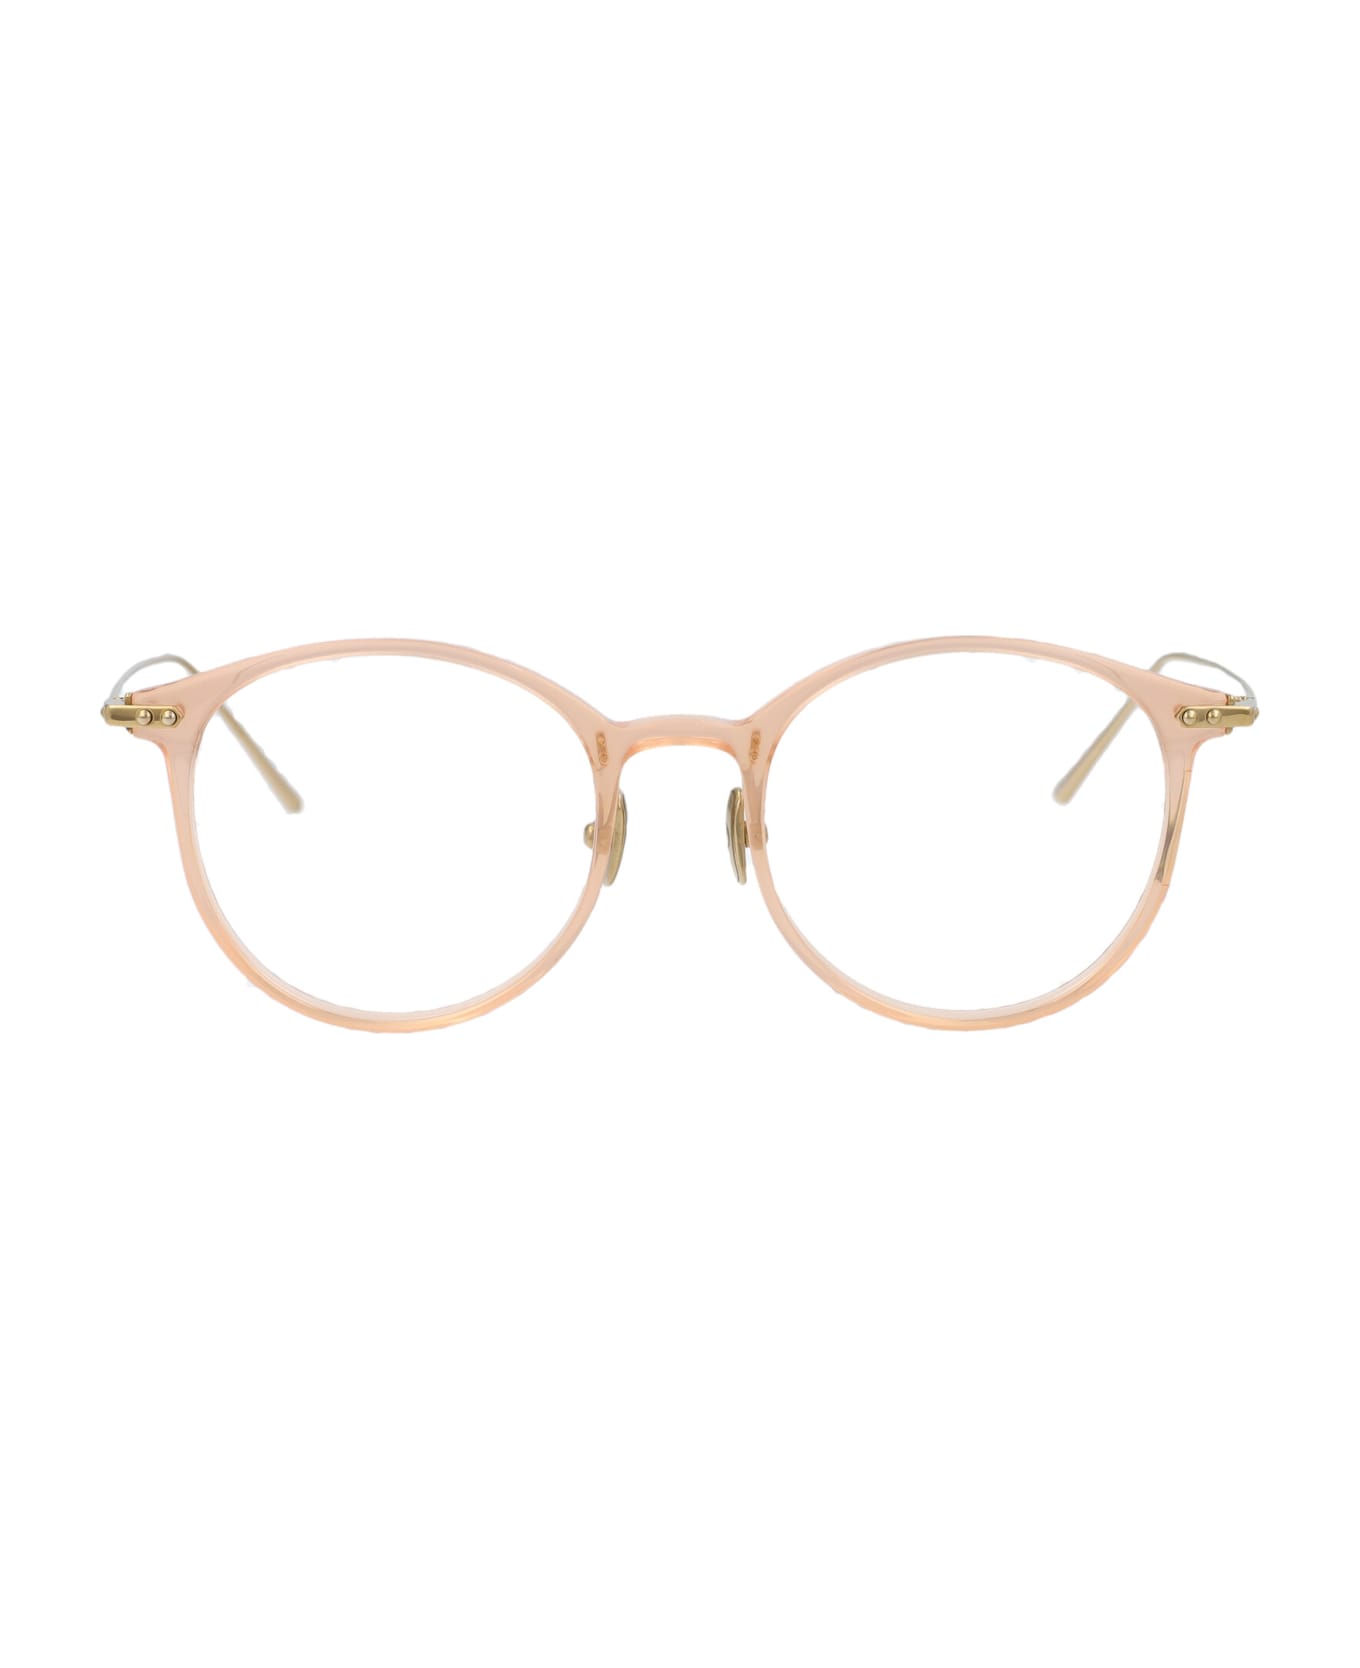 Linda Farrow Gray Glasses - 20 PEACH/ LIGHT GOLD/ OPTICAL